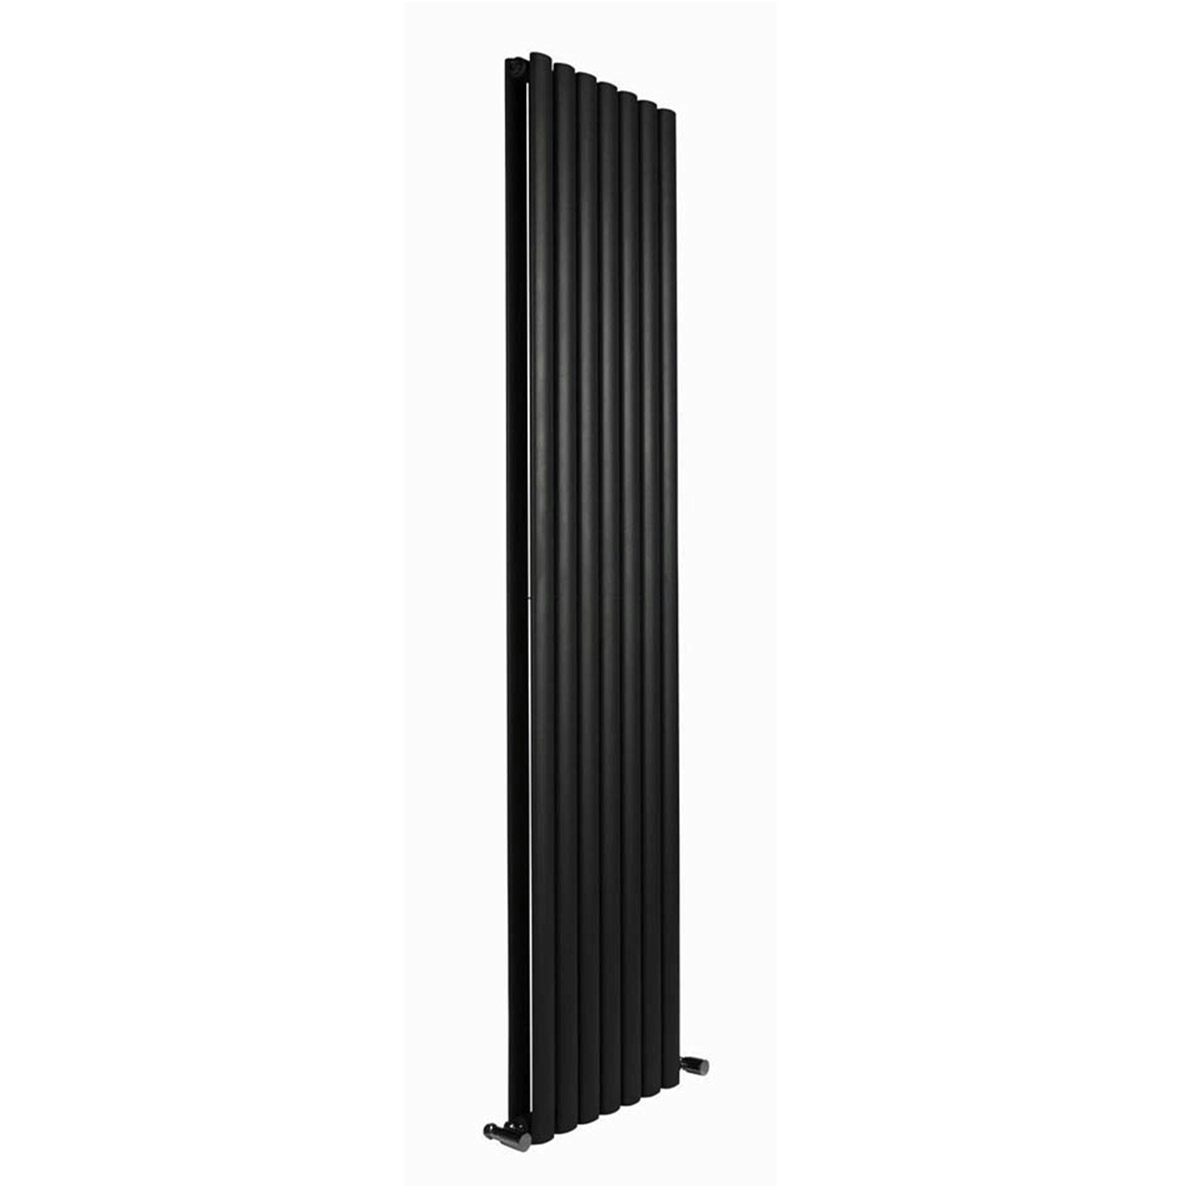 Reina Neva anthracite grey double vertical steel designer radiator 1800 x 413